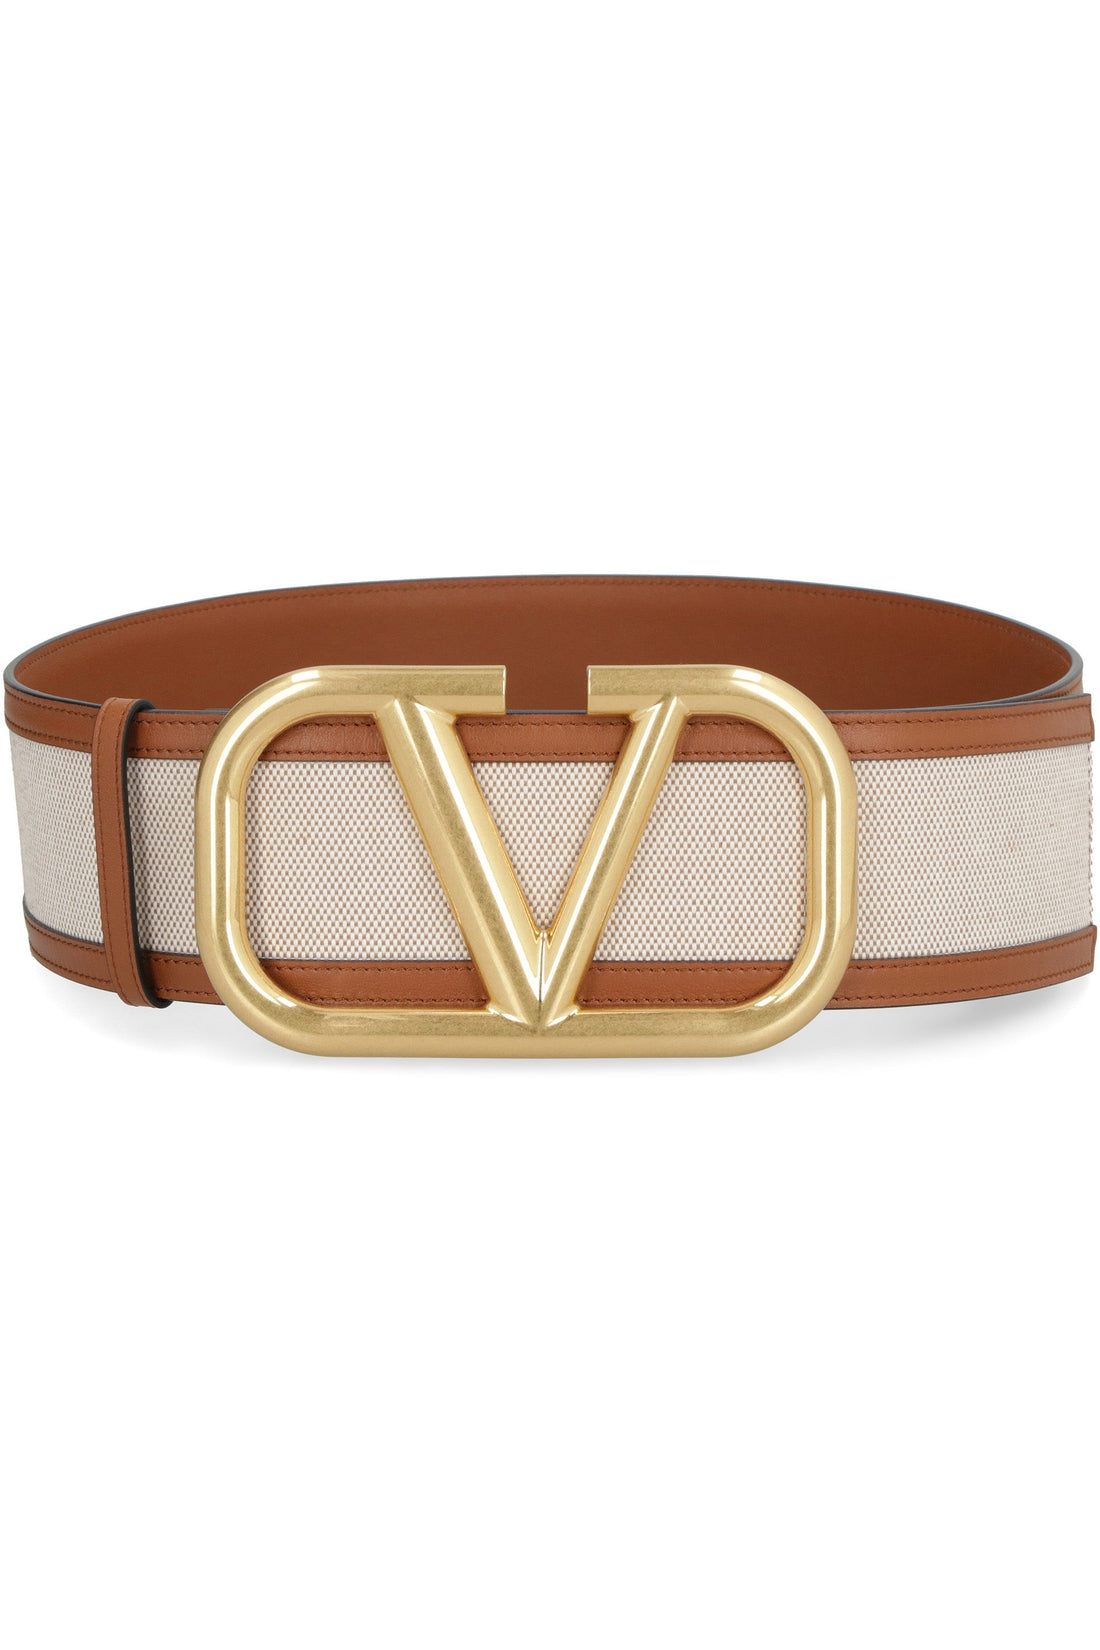 Valentino-OUTLET-SALE-Valentino Garavani - Canvas and leather belt-ARCHIVIST